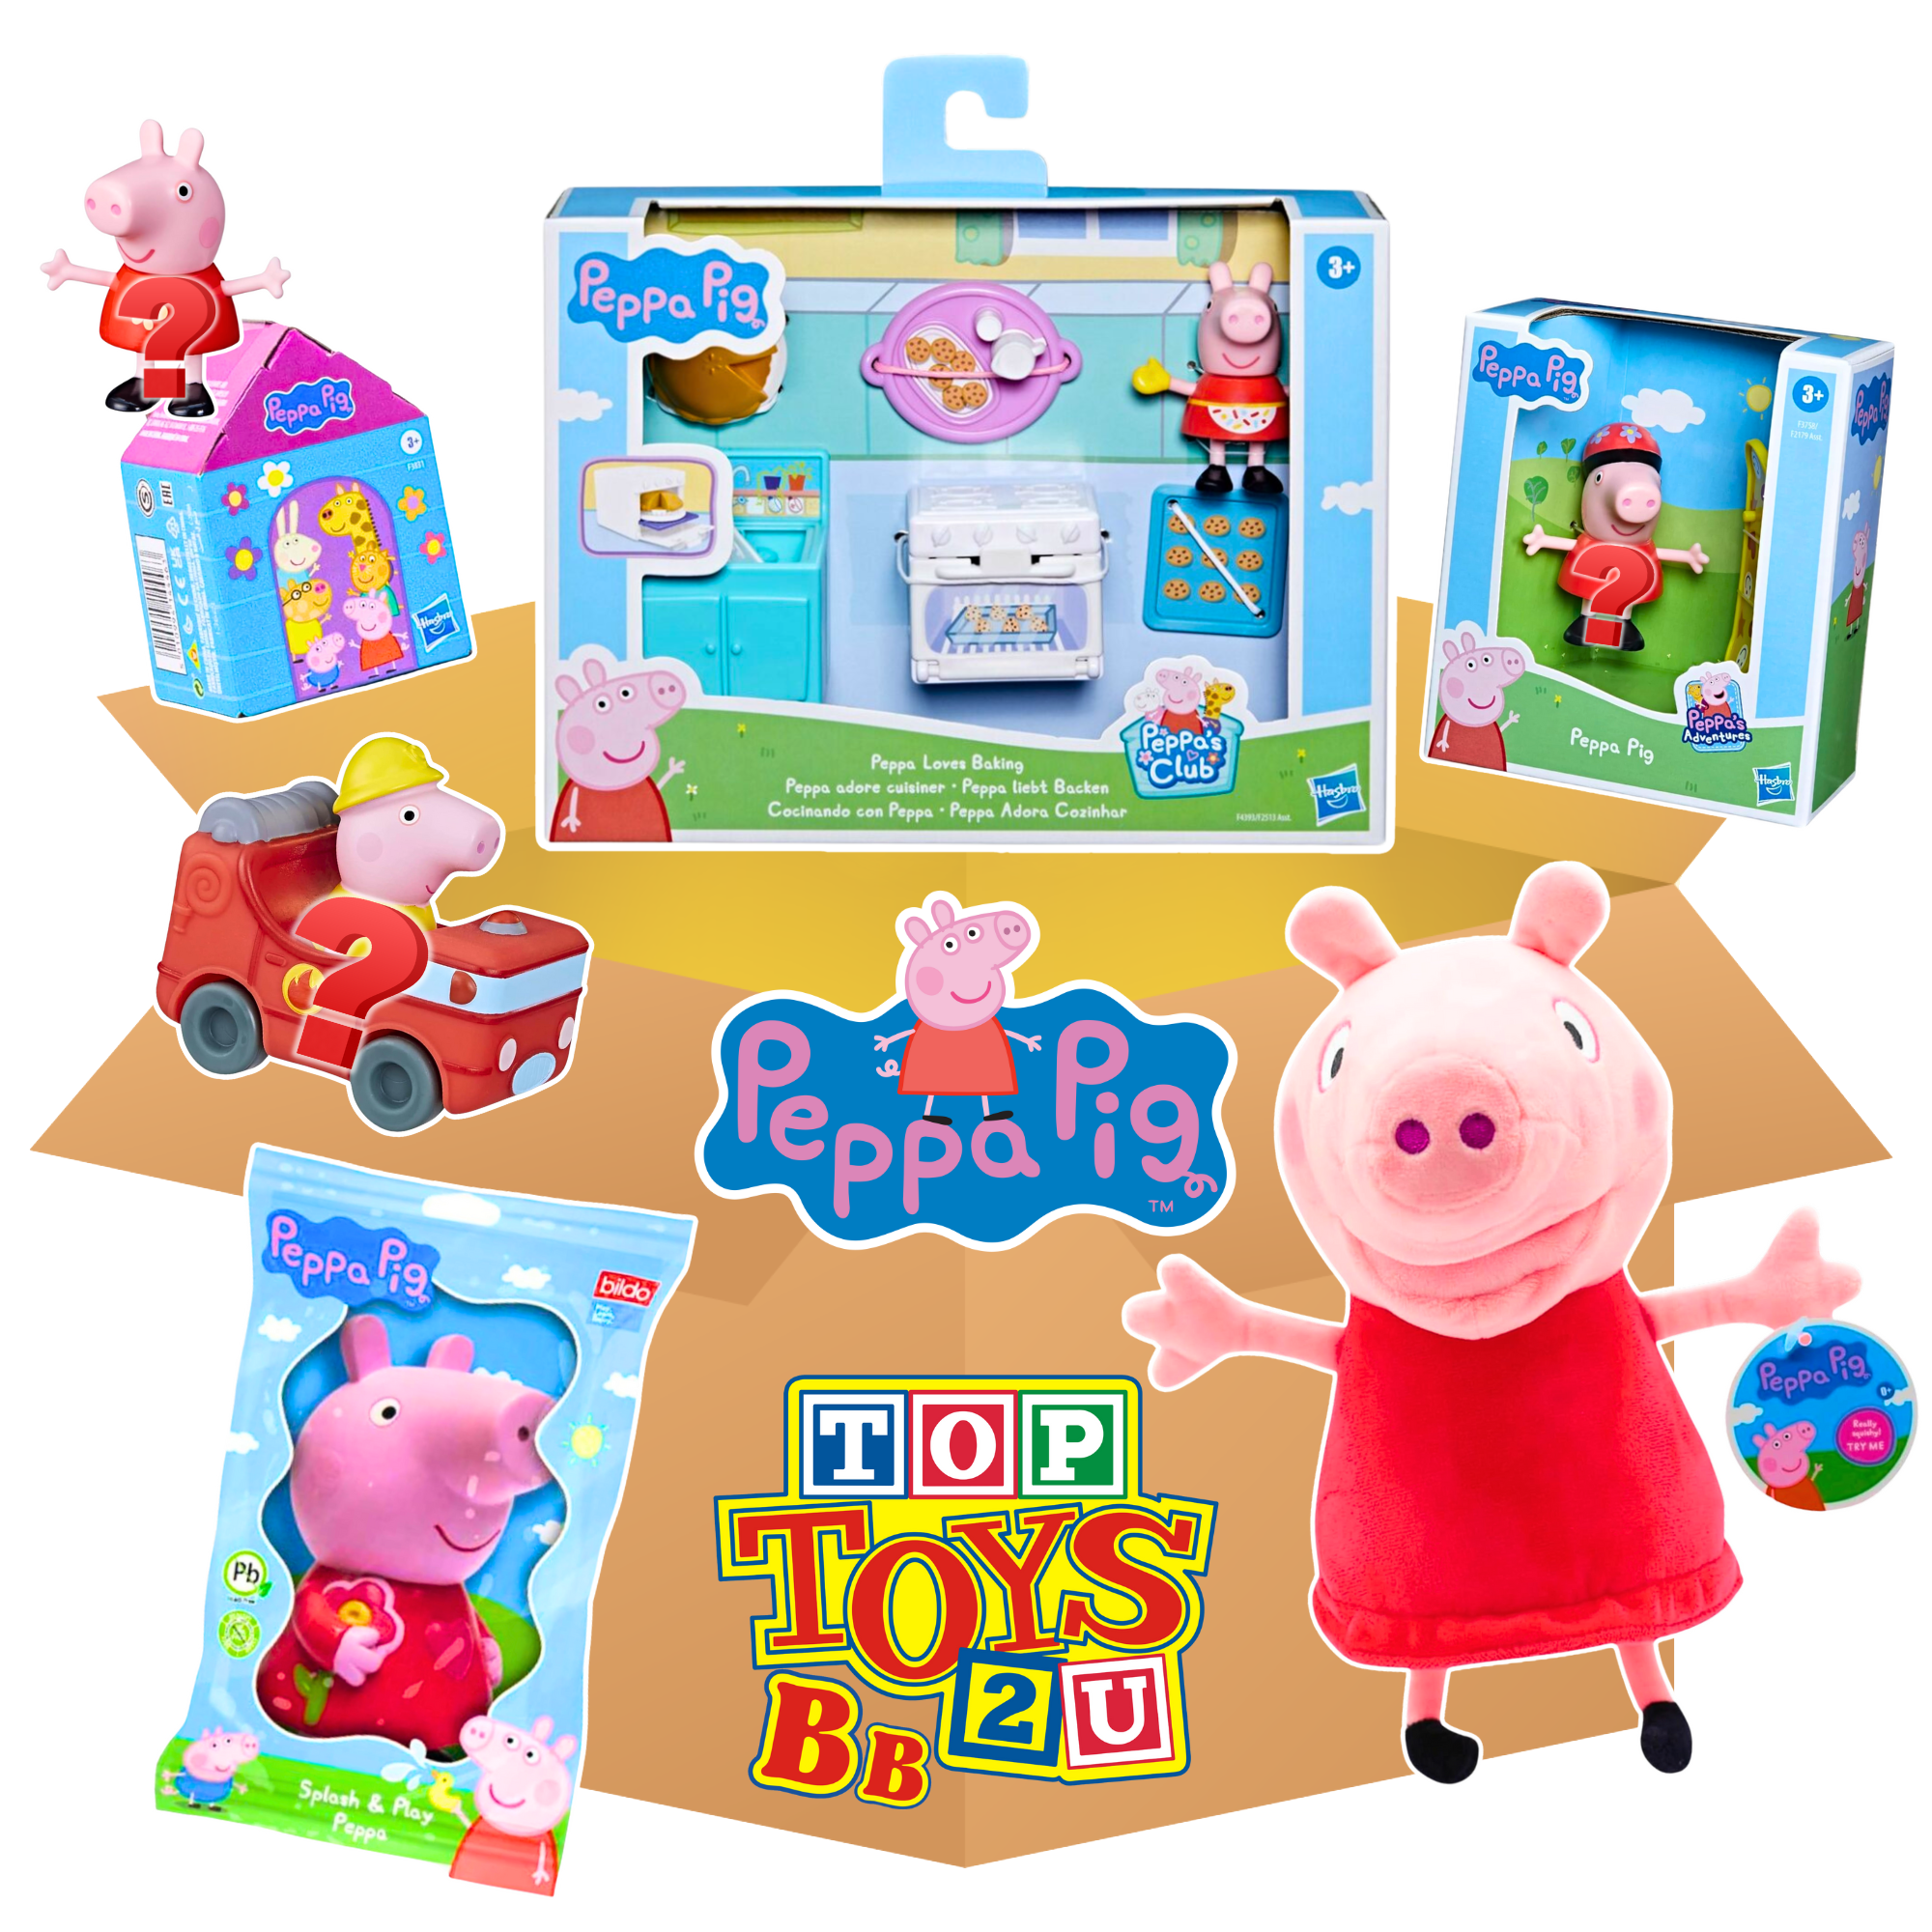 Toptoys2u Peppa Pig 6 Piece Bargain Bundle Box